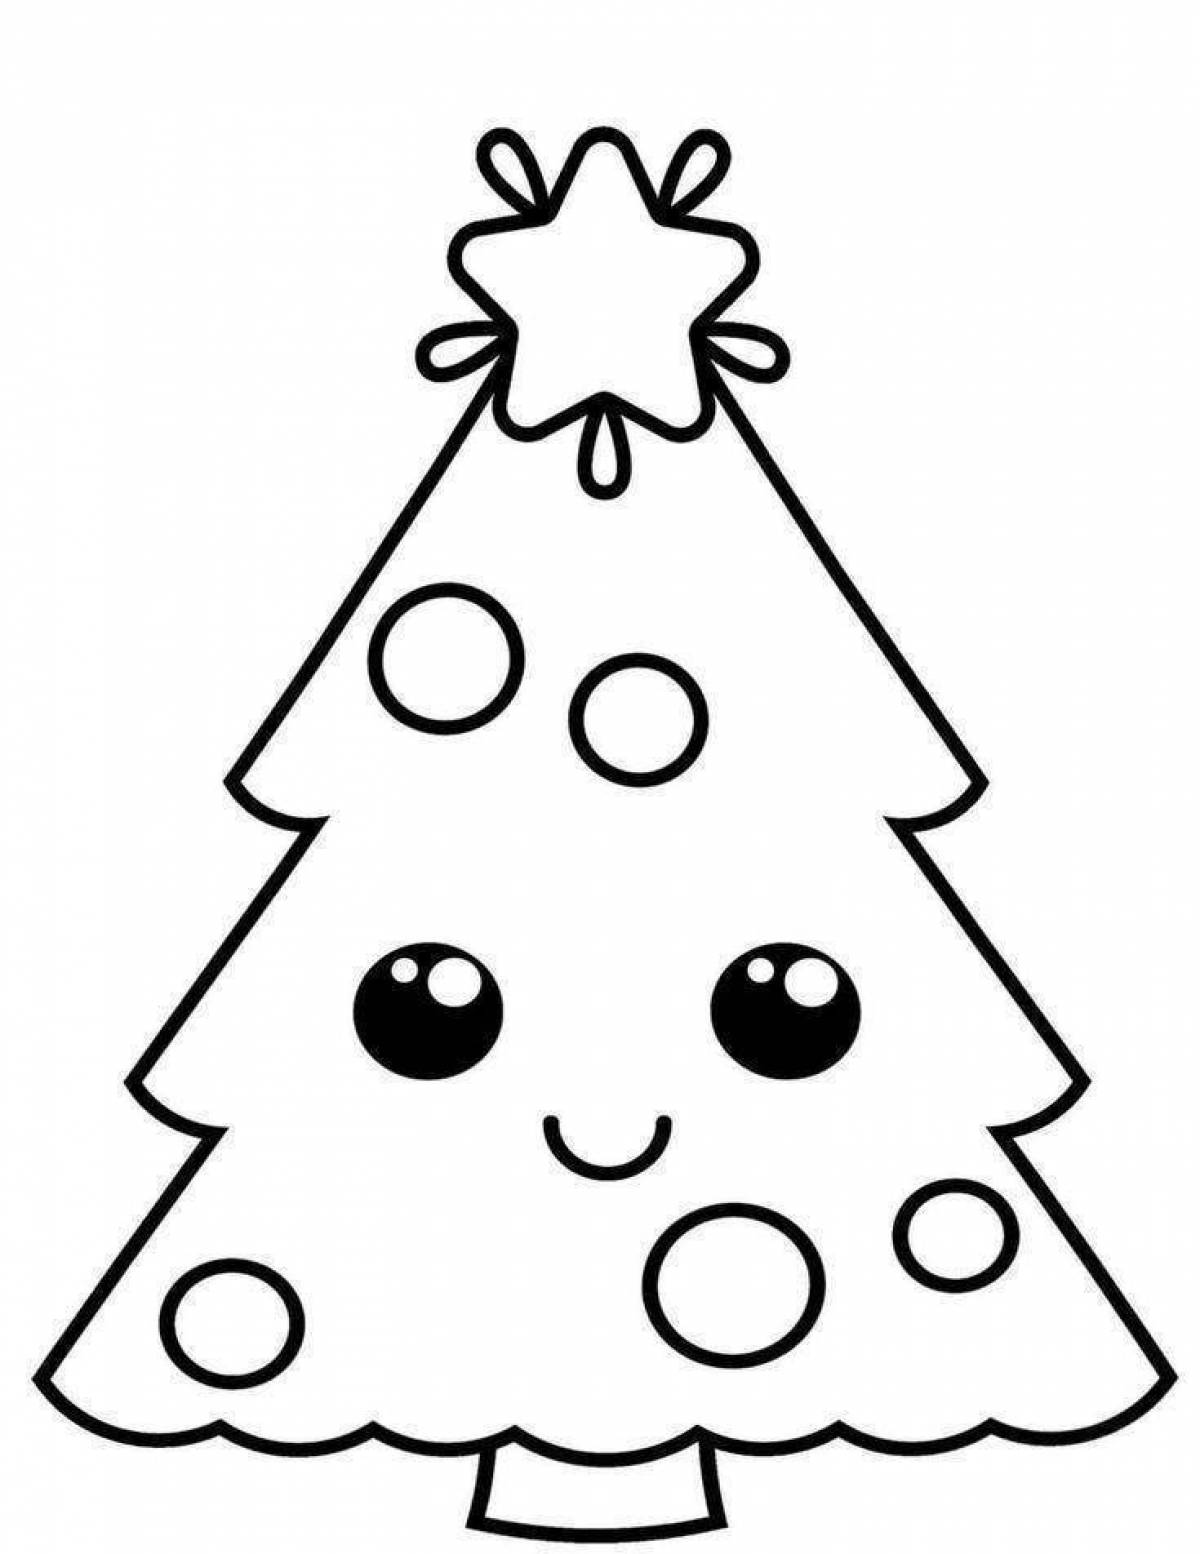 Playful christmas tree coloring page